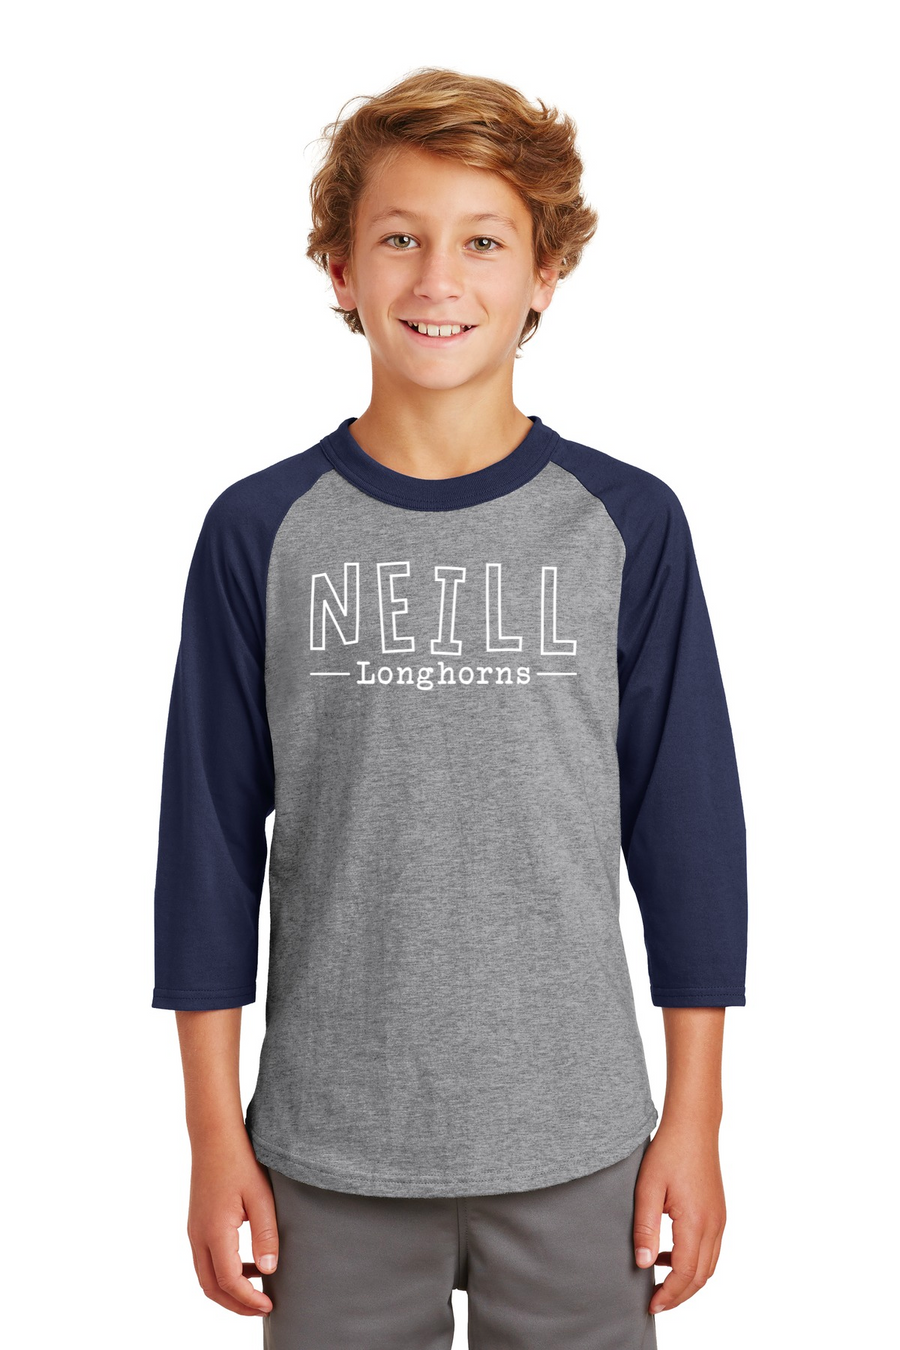 Neill Elementary Spirit Wear 2023/24 On-Demand-Unisex Baseball Tee Horizontal Logo